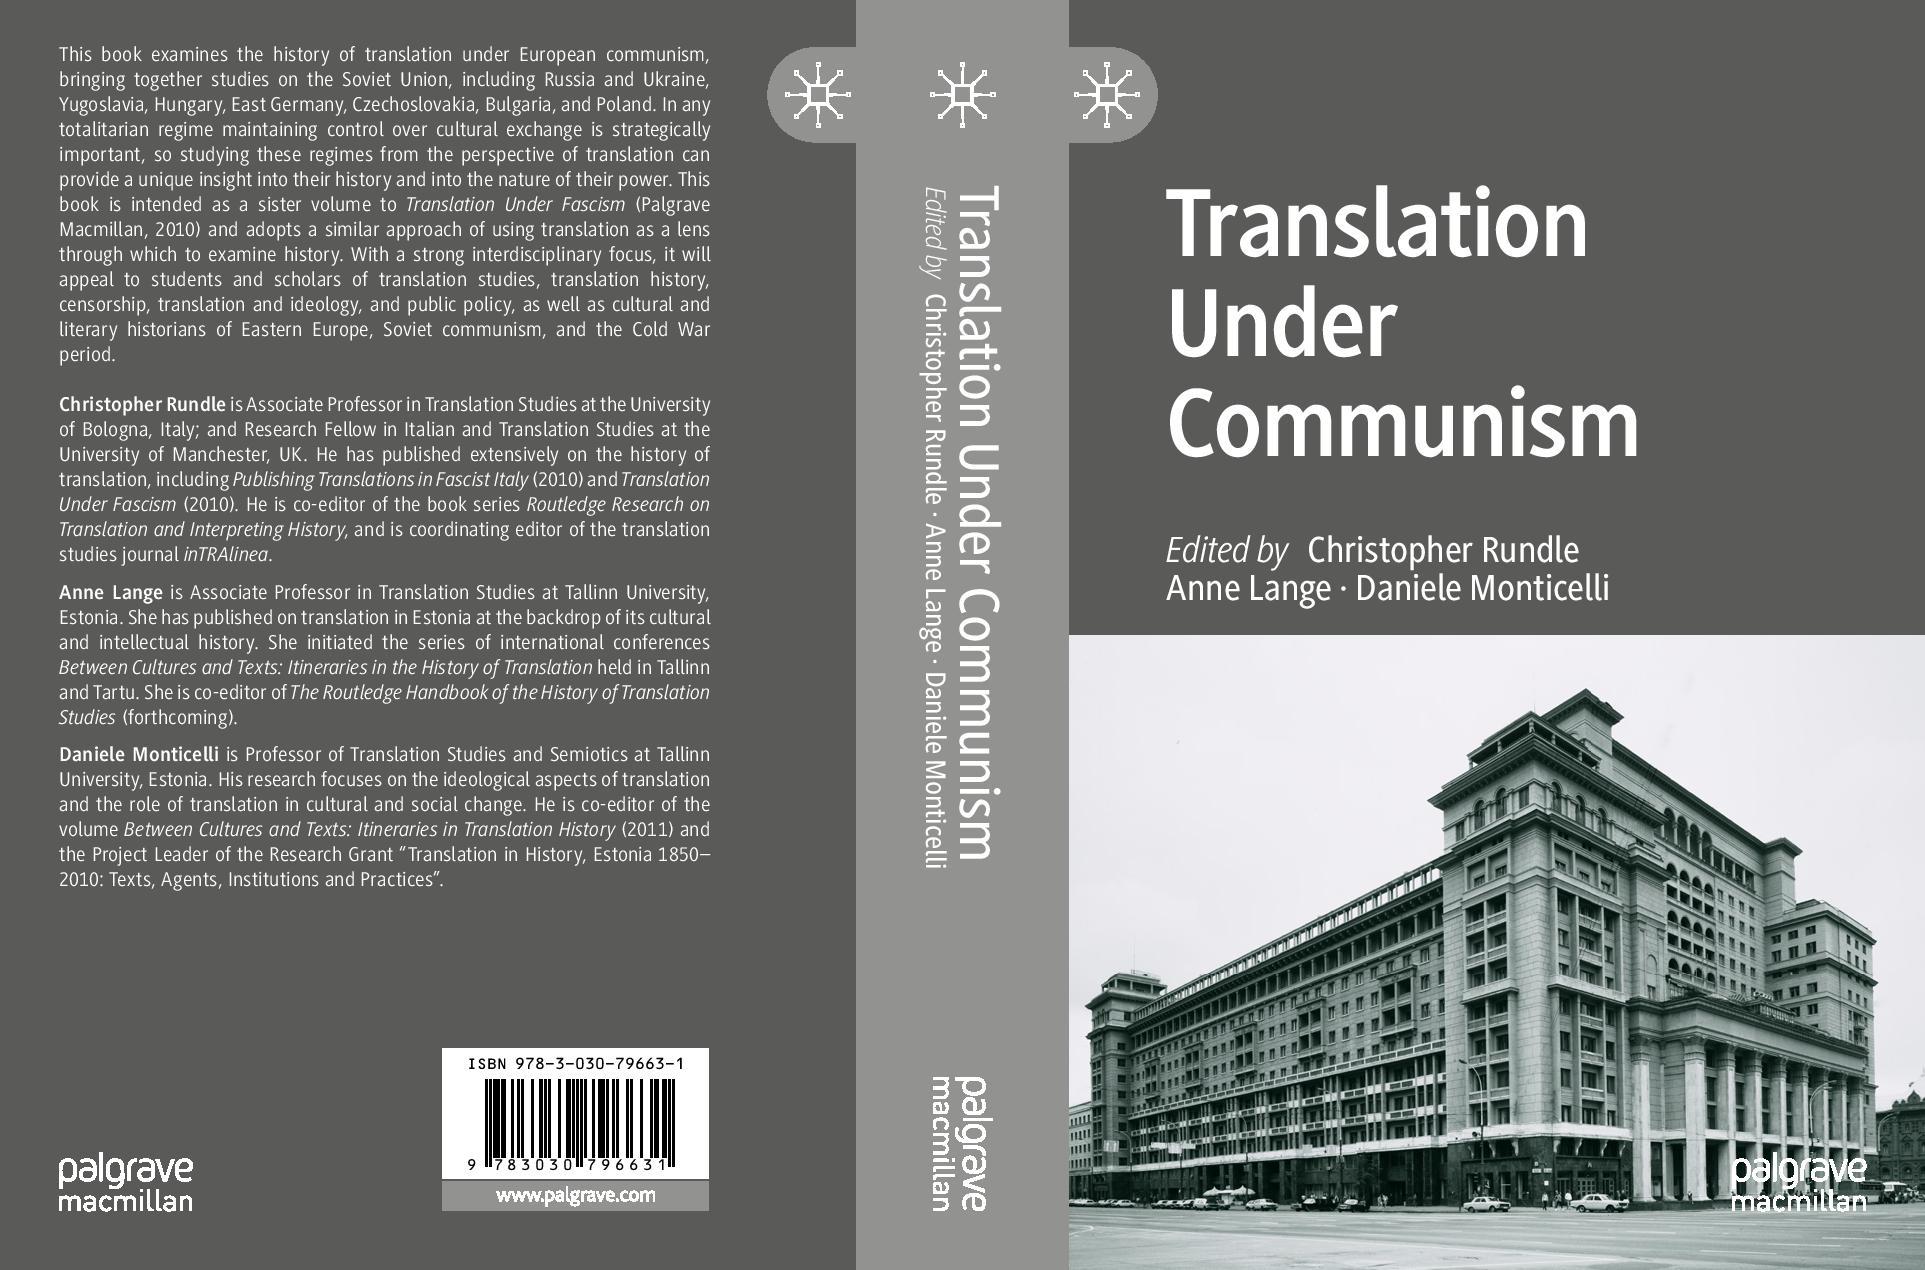 Translation under Communism 